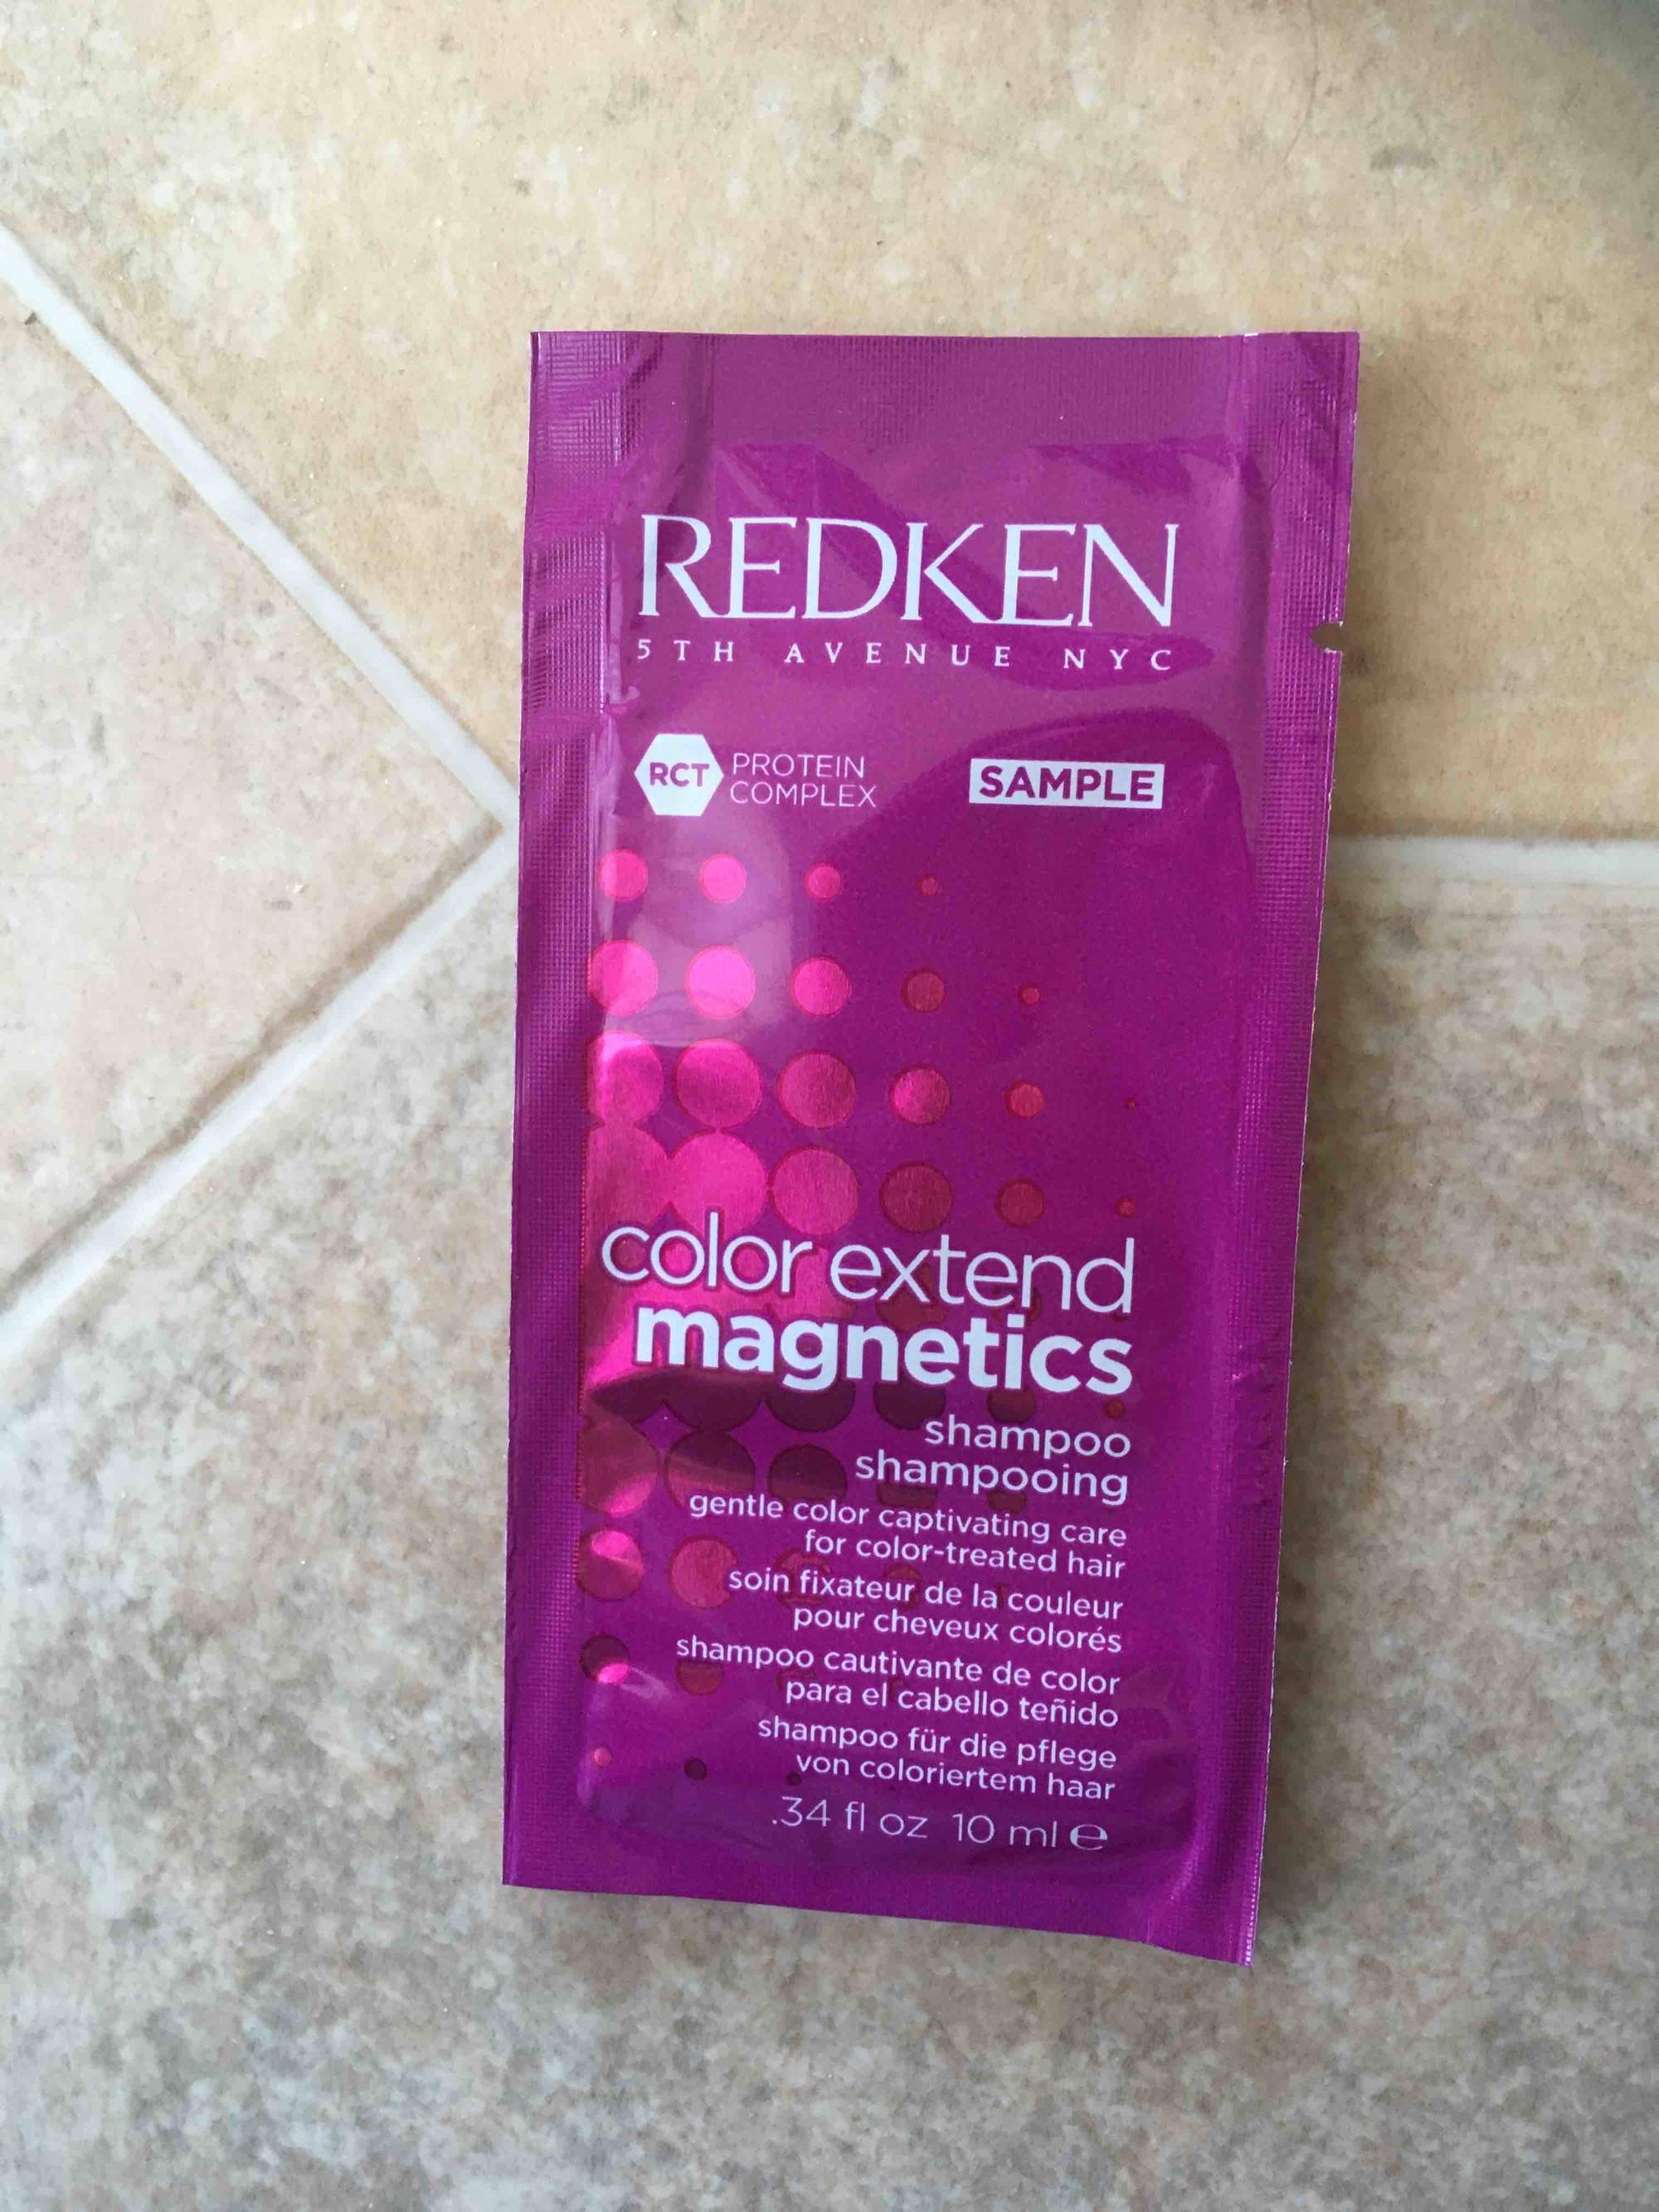 REDKEN - Color extend magnetics - Shampooing